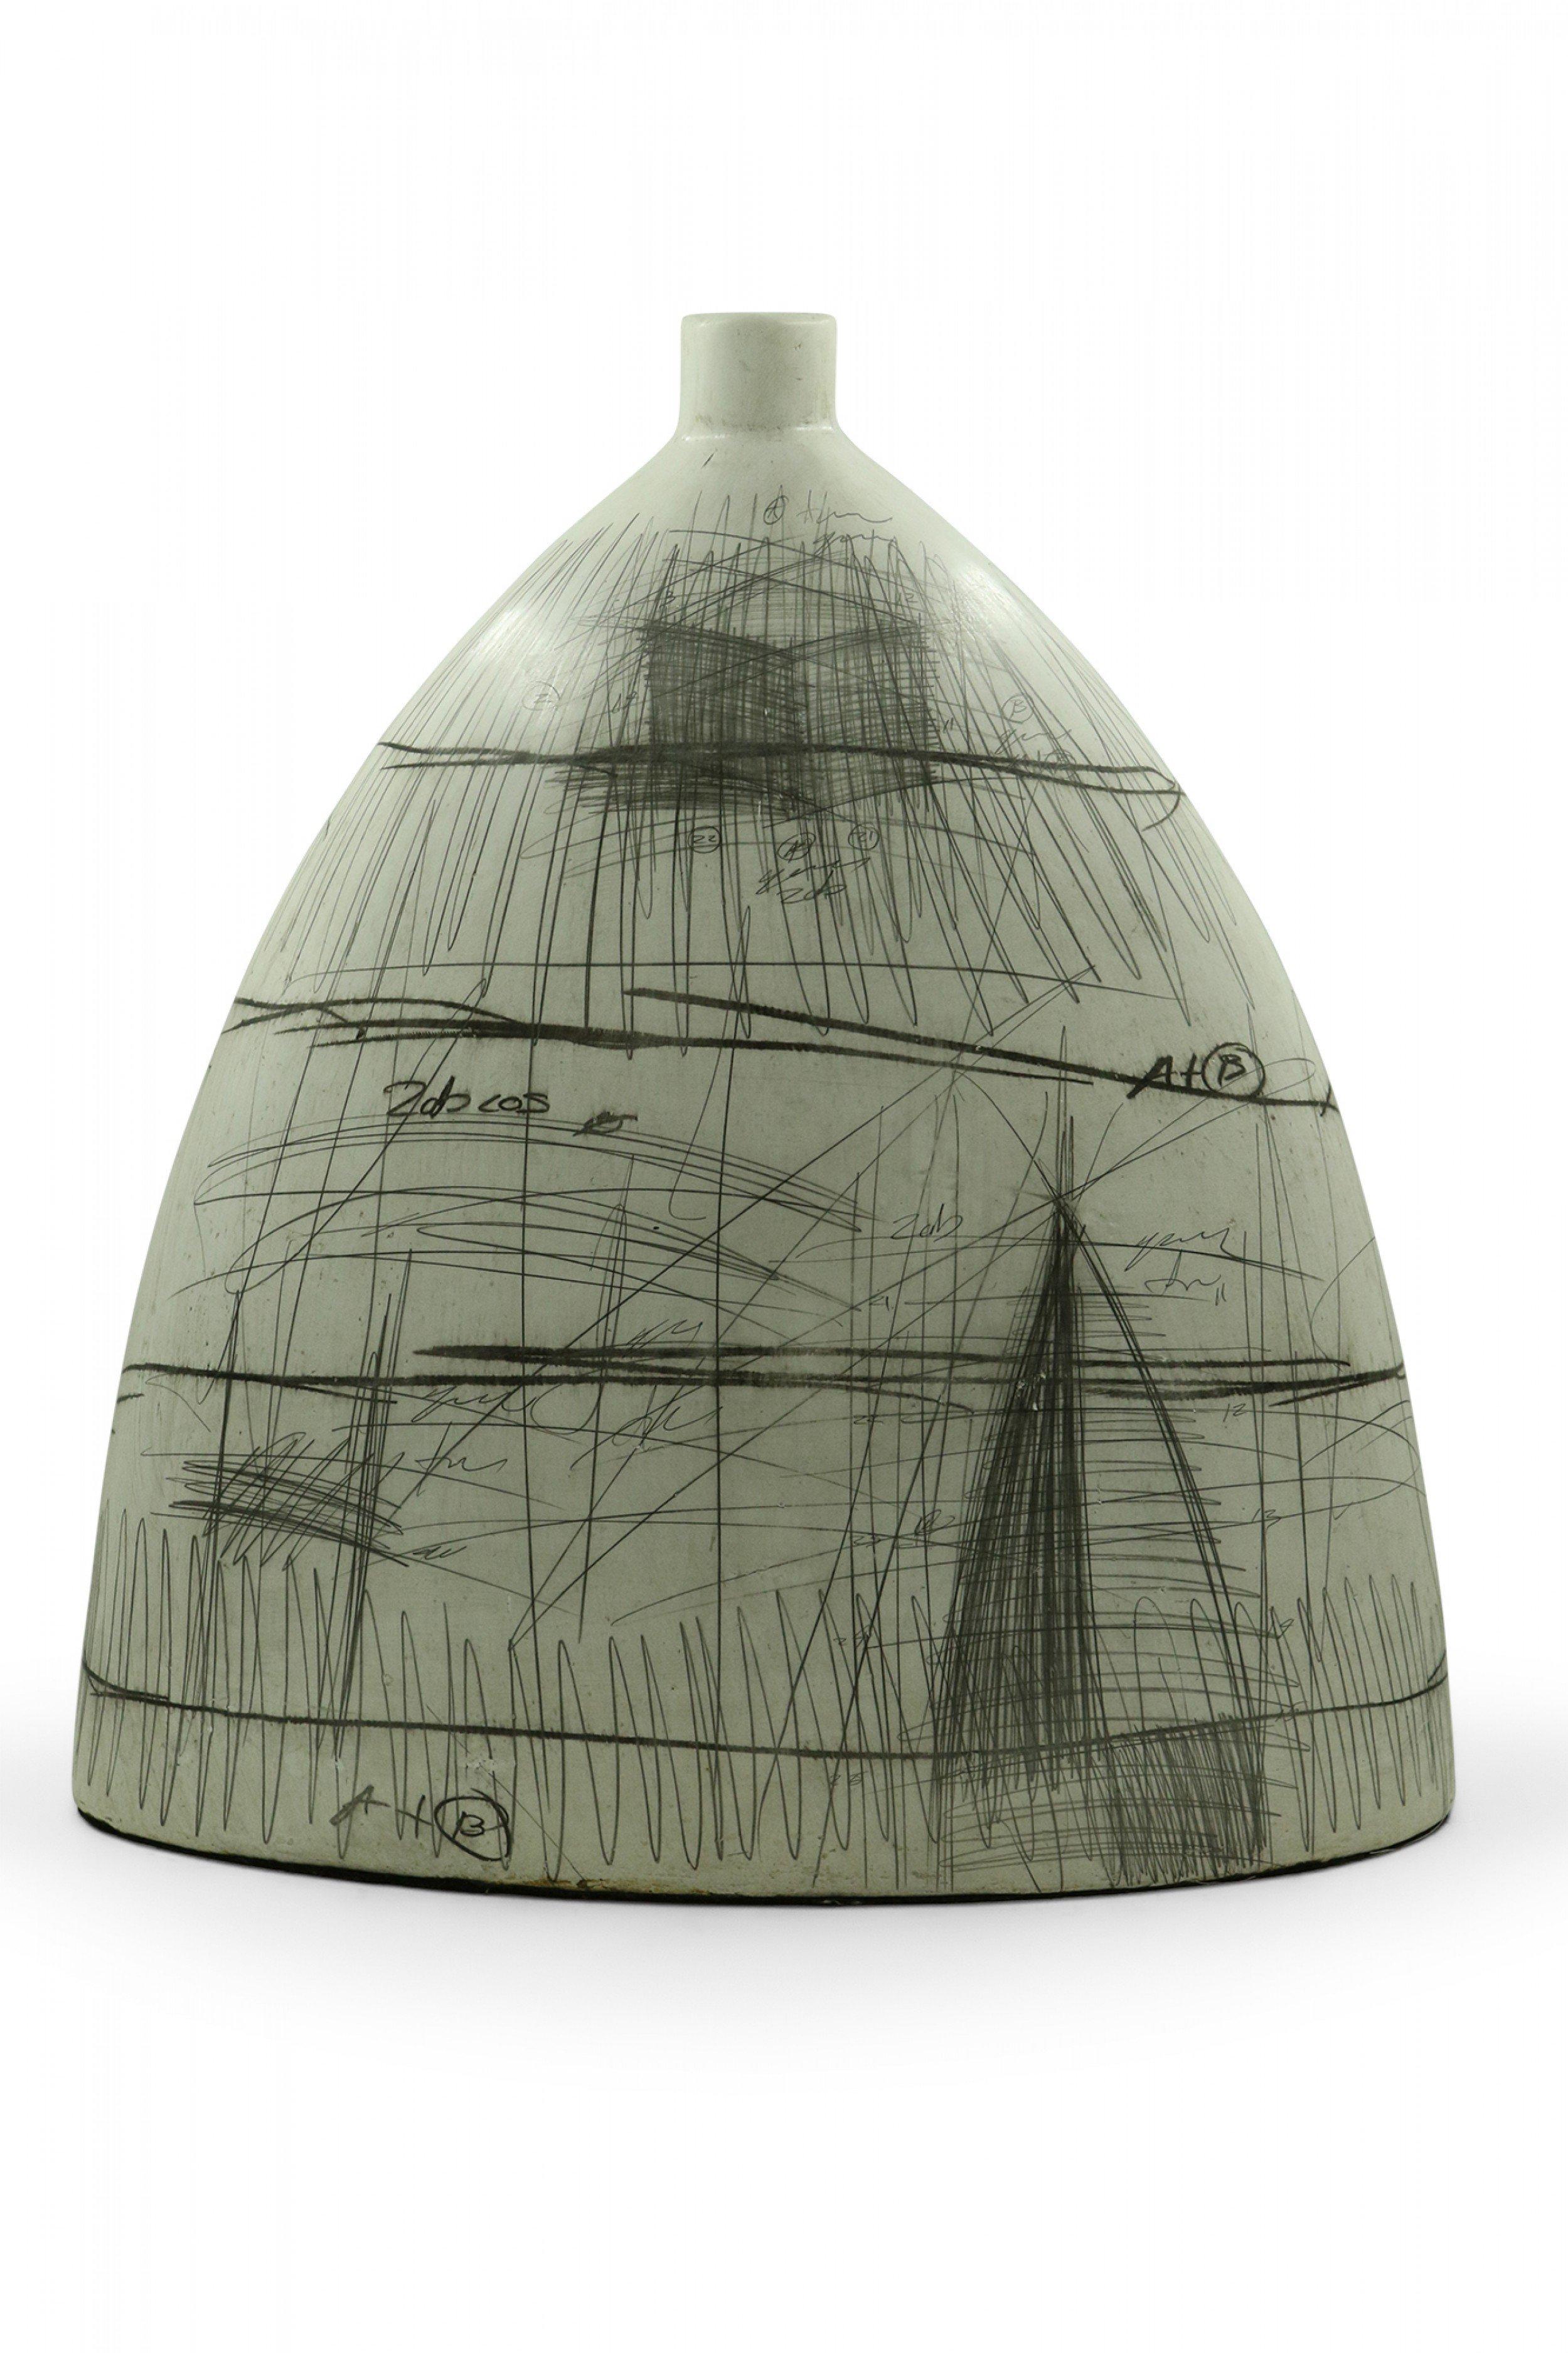 American Yuri Zatarain Contemporary Beige Charcoal Equation and Diagram Design Vase For Sale